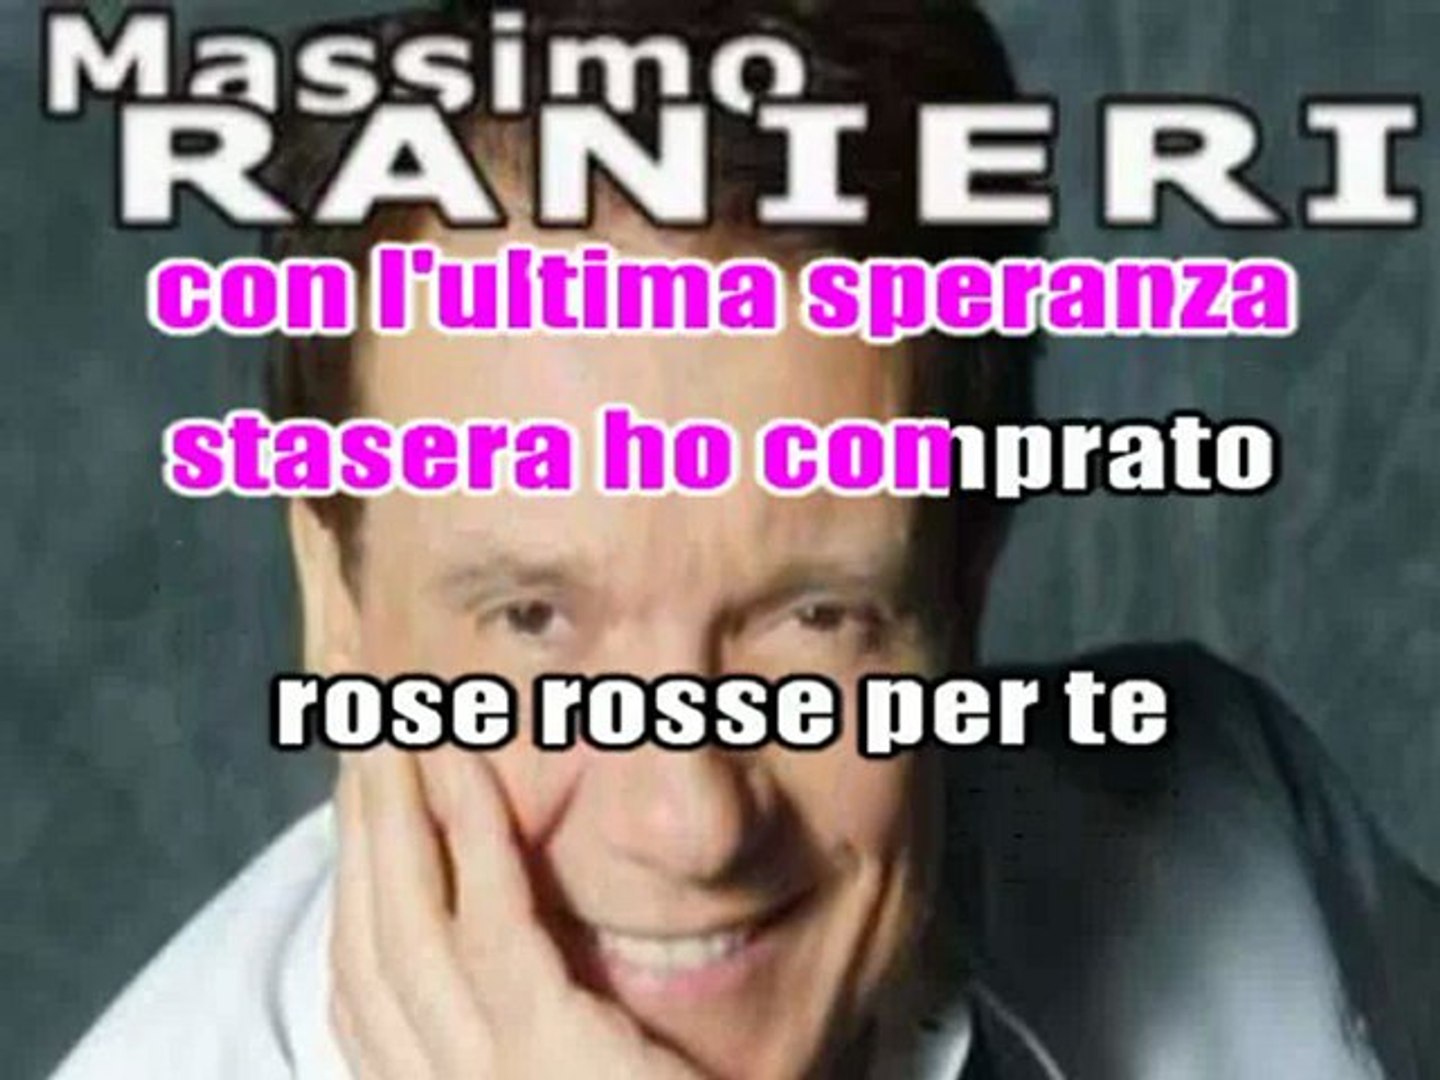 Massimo Ranieri - Rose rosse karaoke - Video Dailymotion